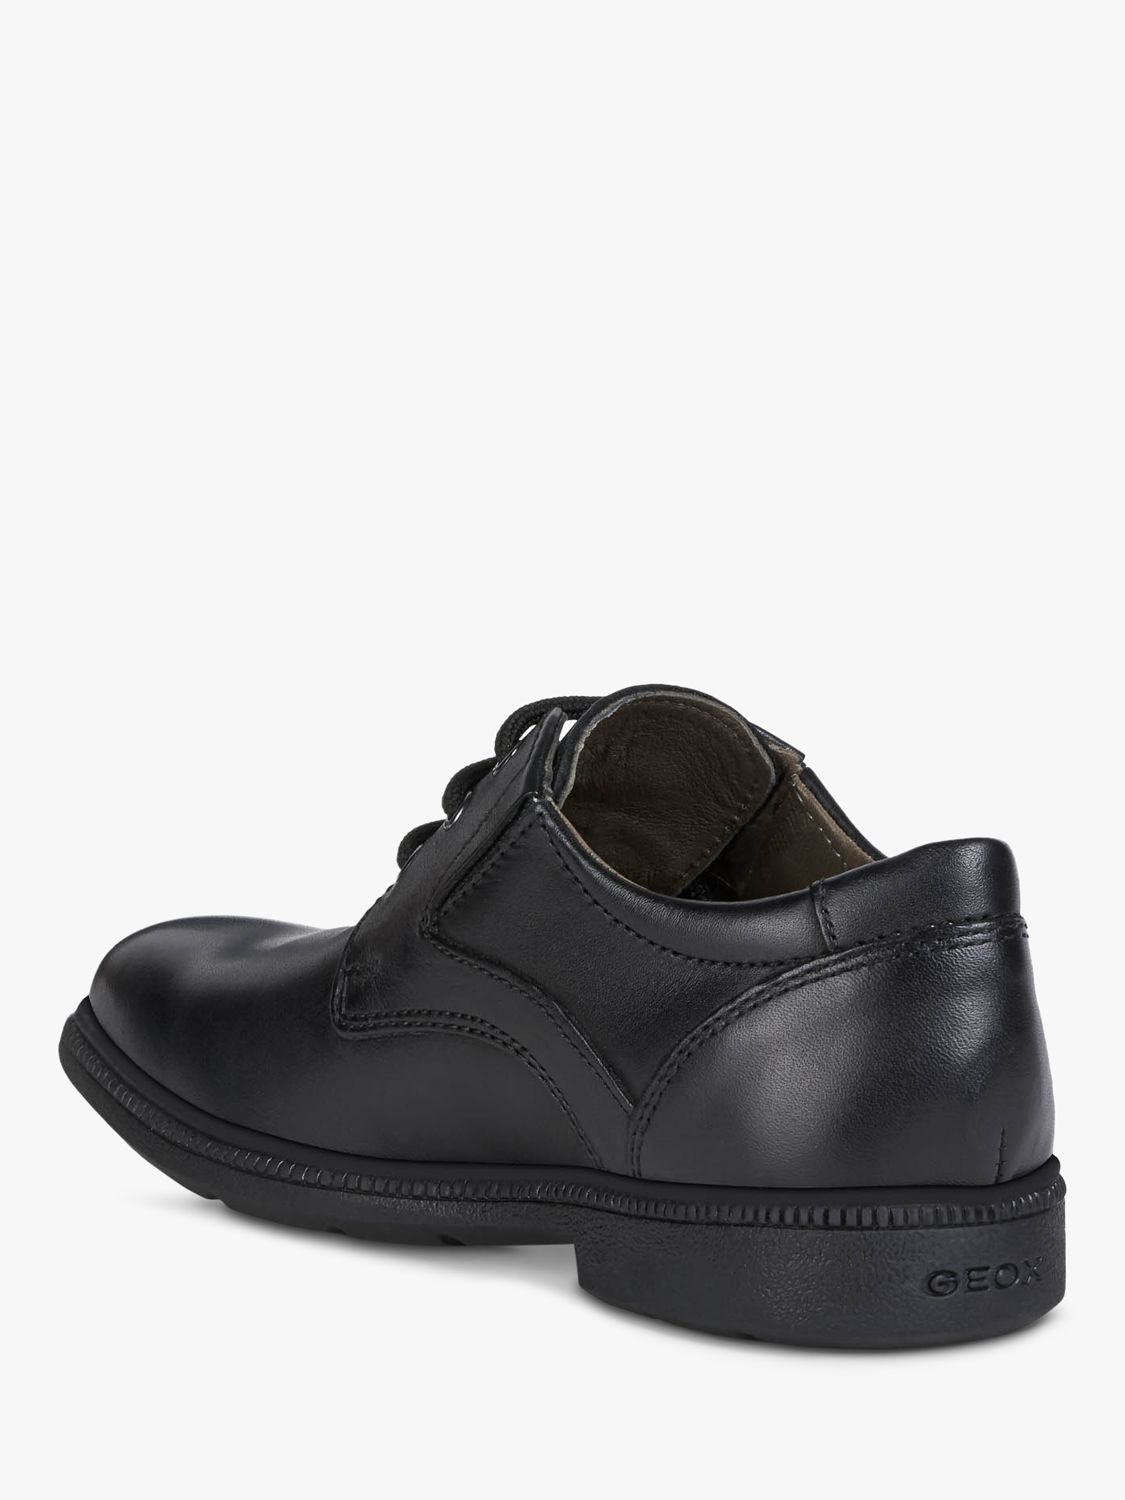 Geox Kids' Federico School Shoes, Black, 35